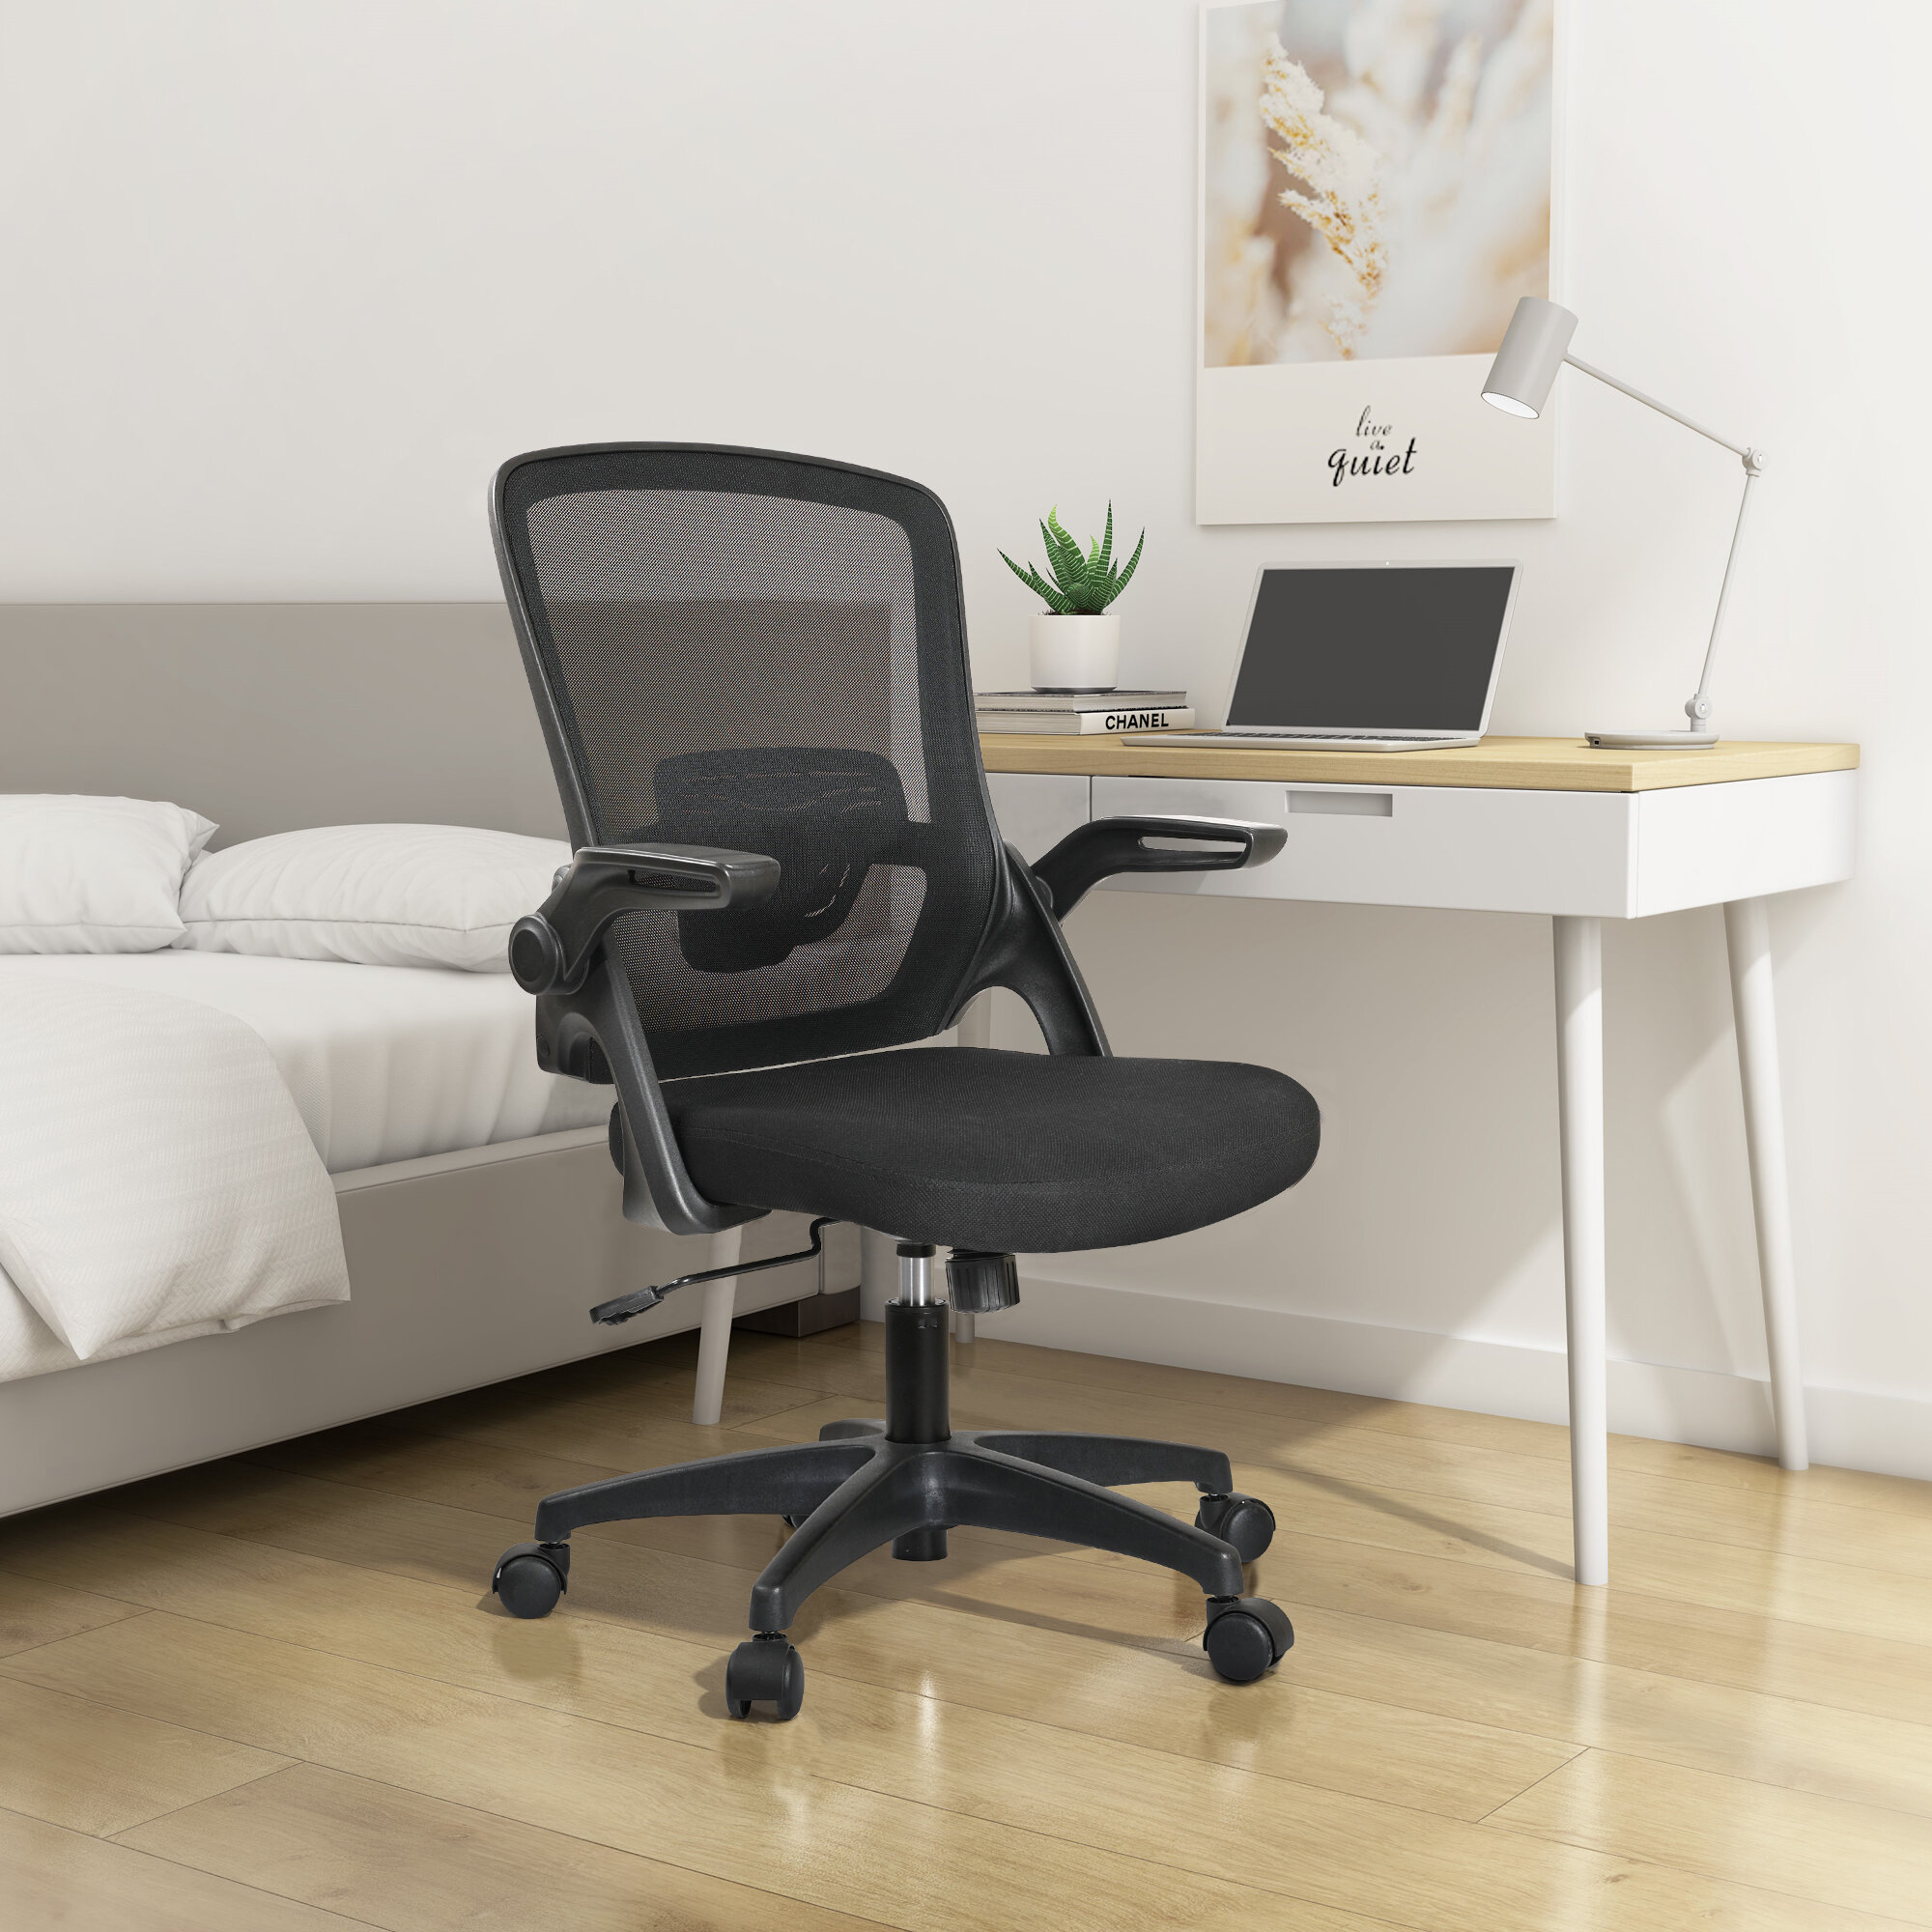 Ergonomic Office Chair Mesh Computer Desk Chair Flip-up Arms Height Adjustable 